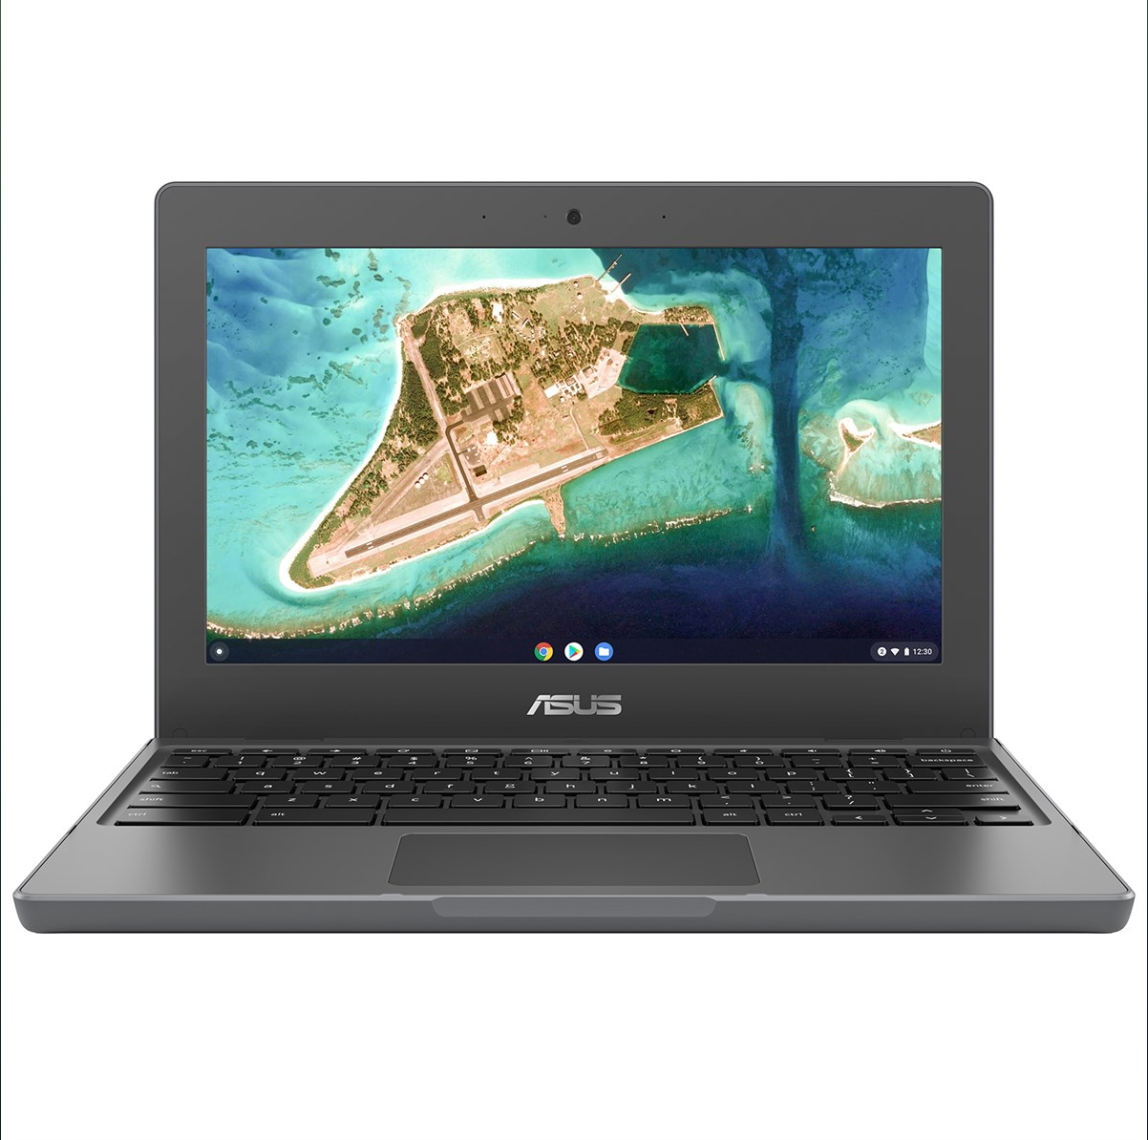 Acer Chromebook 311 C722 - MT8183 / 2 GHz - Chrome OS - Mali-G72 MP3 - 4 GB RAM - 64 GB eMMC - 11.6" TN 1366 x 768 - Wi-Fi 5 - shale black - kbd: UK